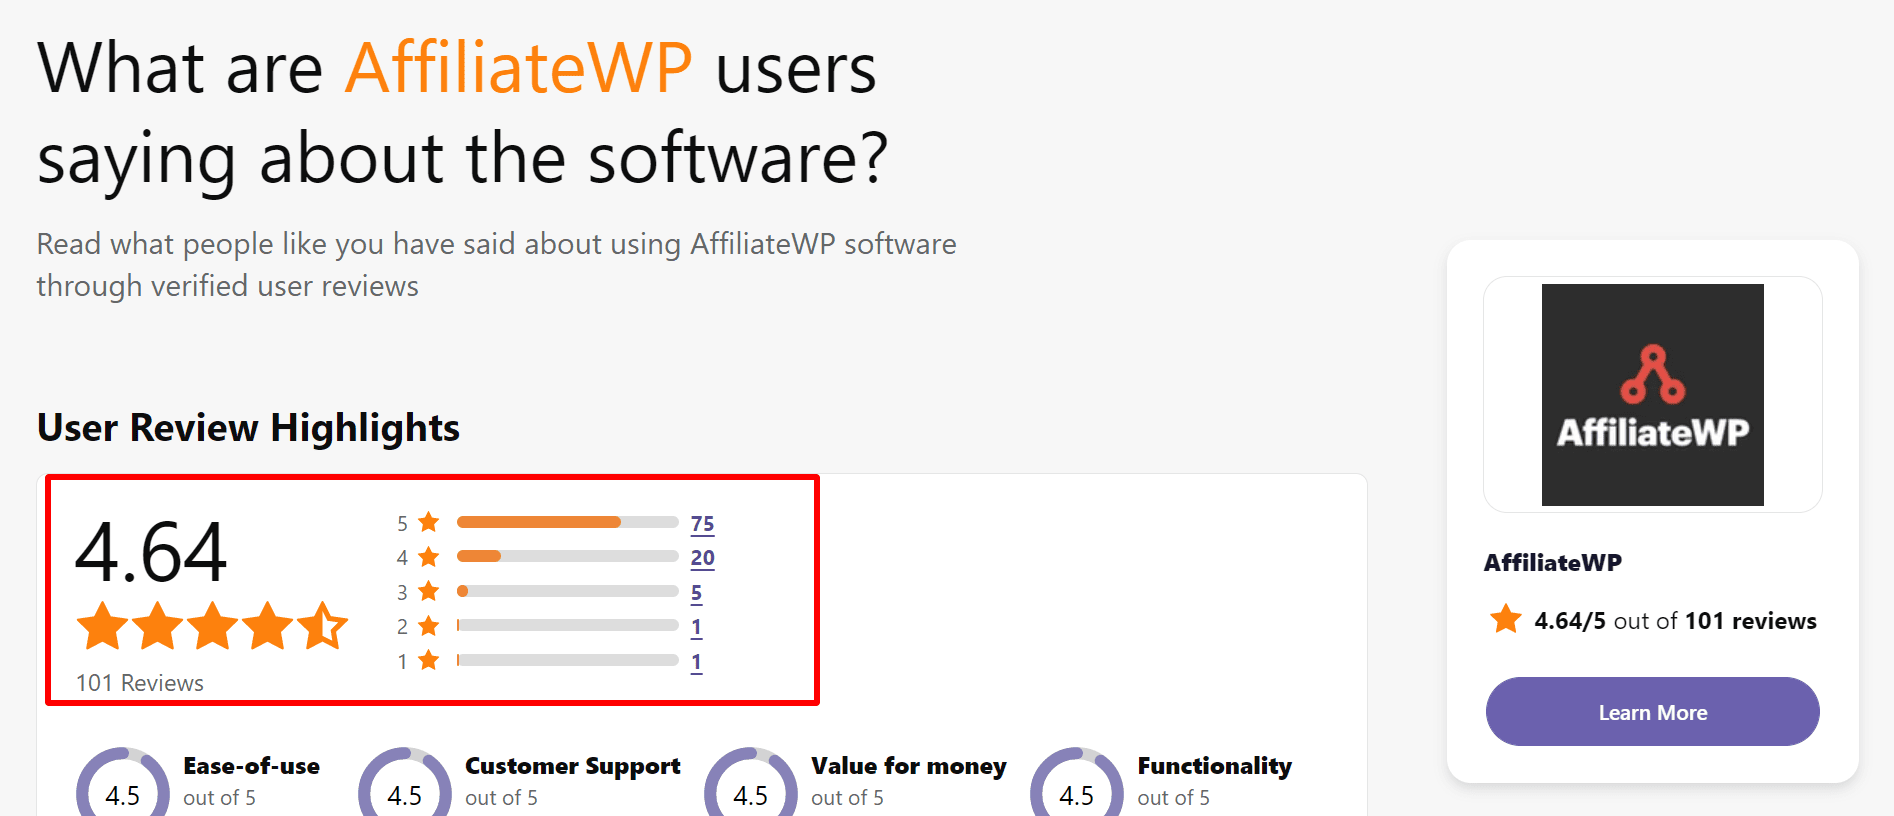 Affiliatewp Review on softwareadvice.com